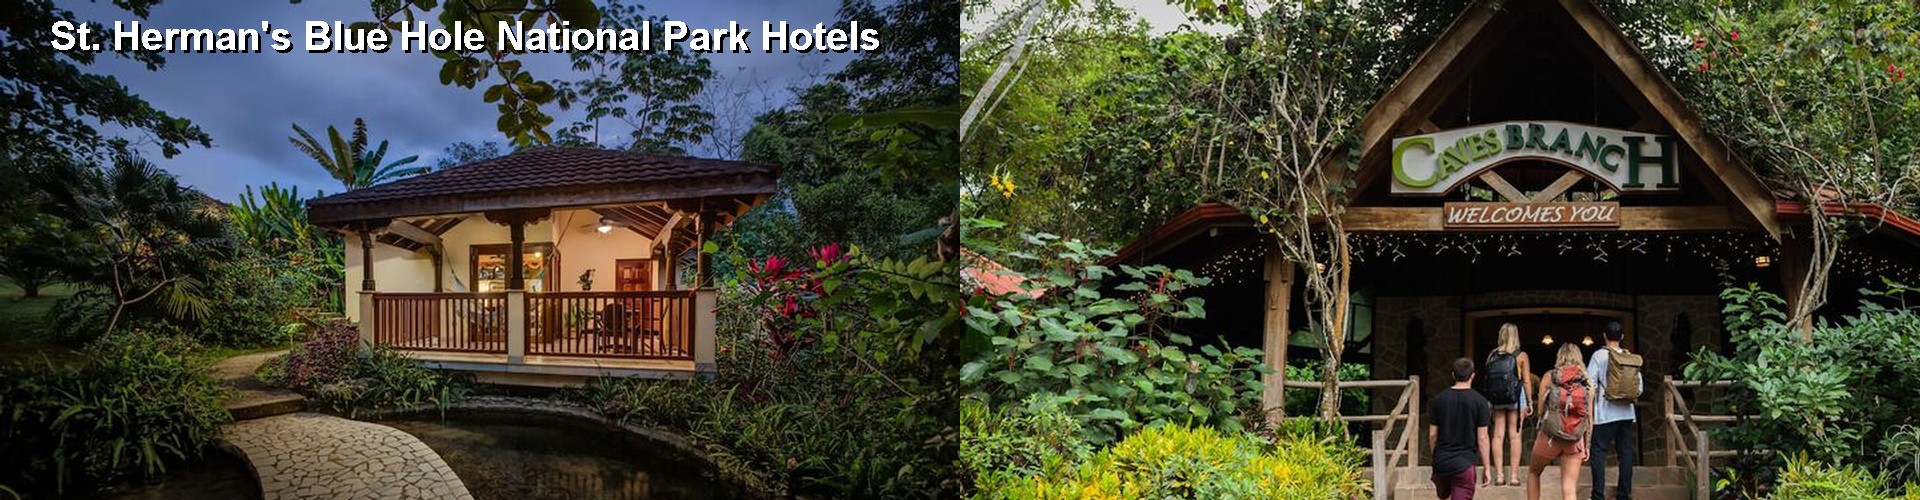 5 Best Hotels near St. Herman's Blue Hole National Park